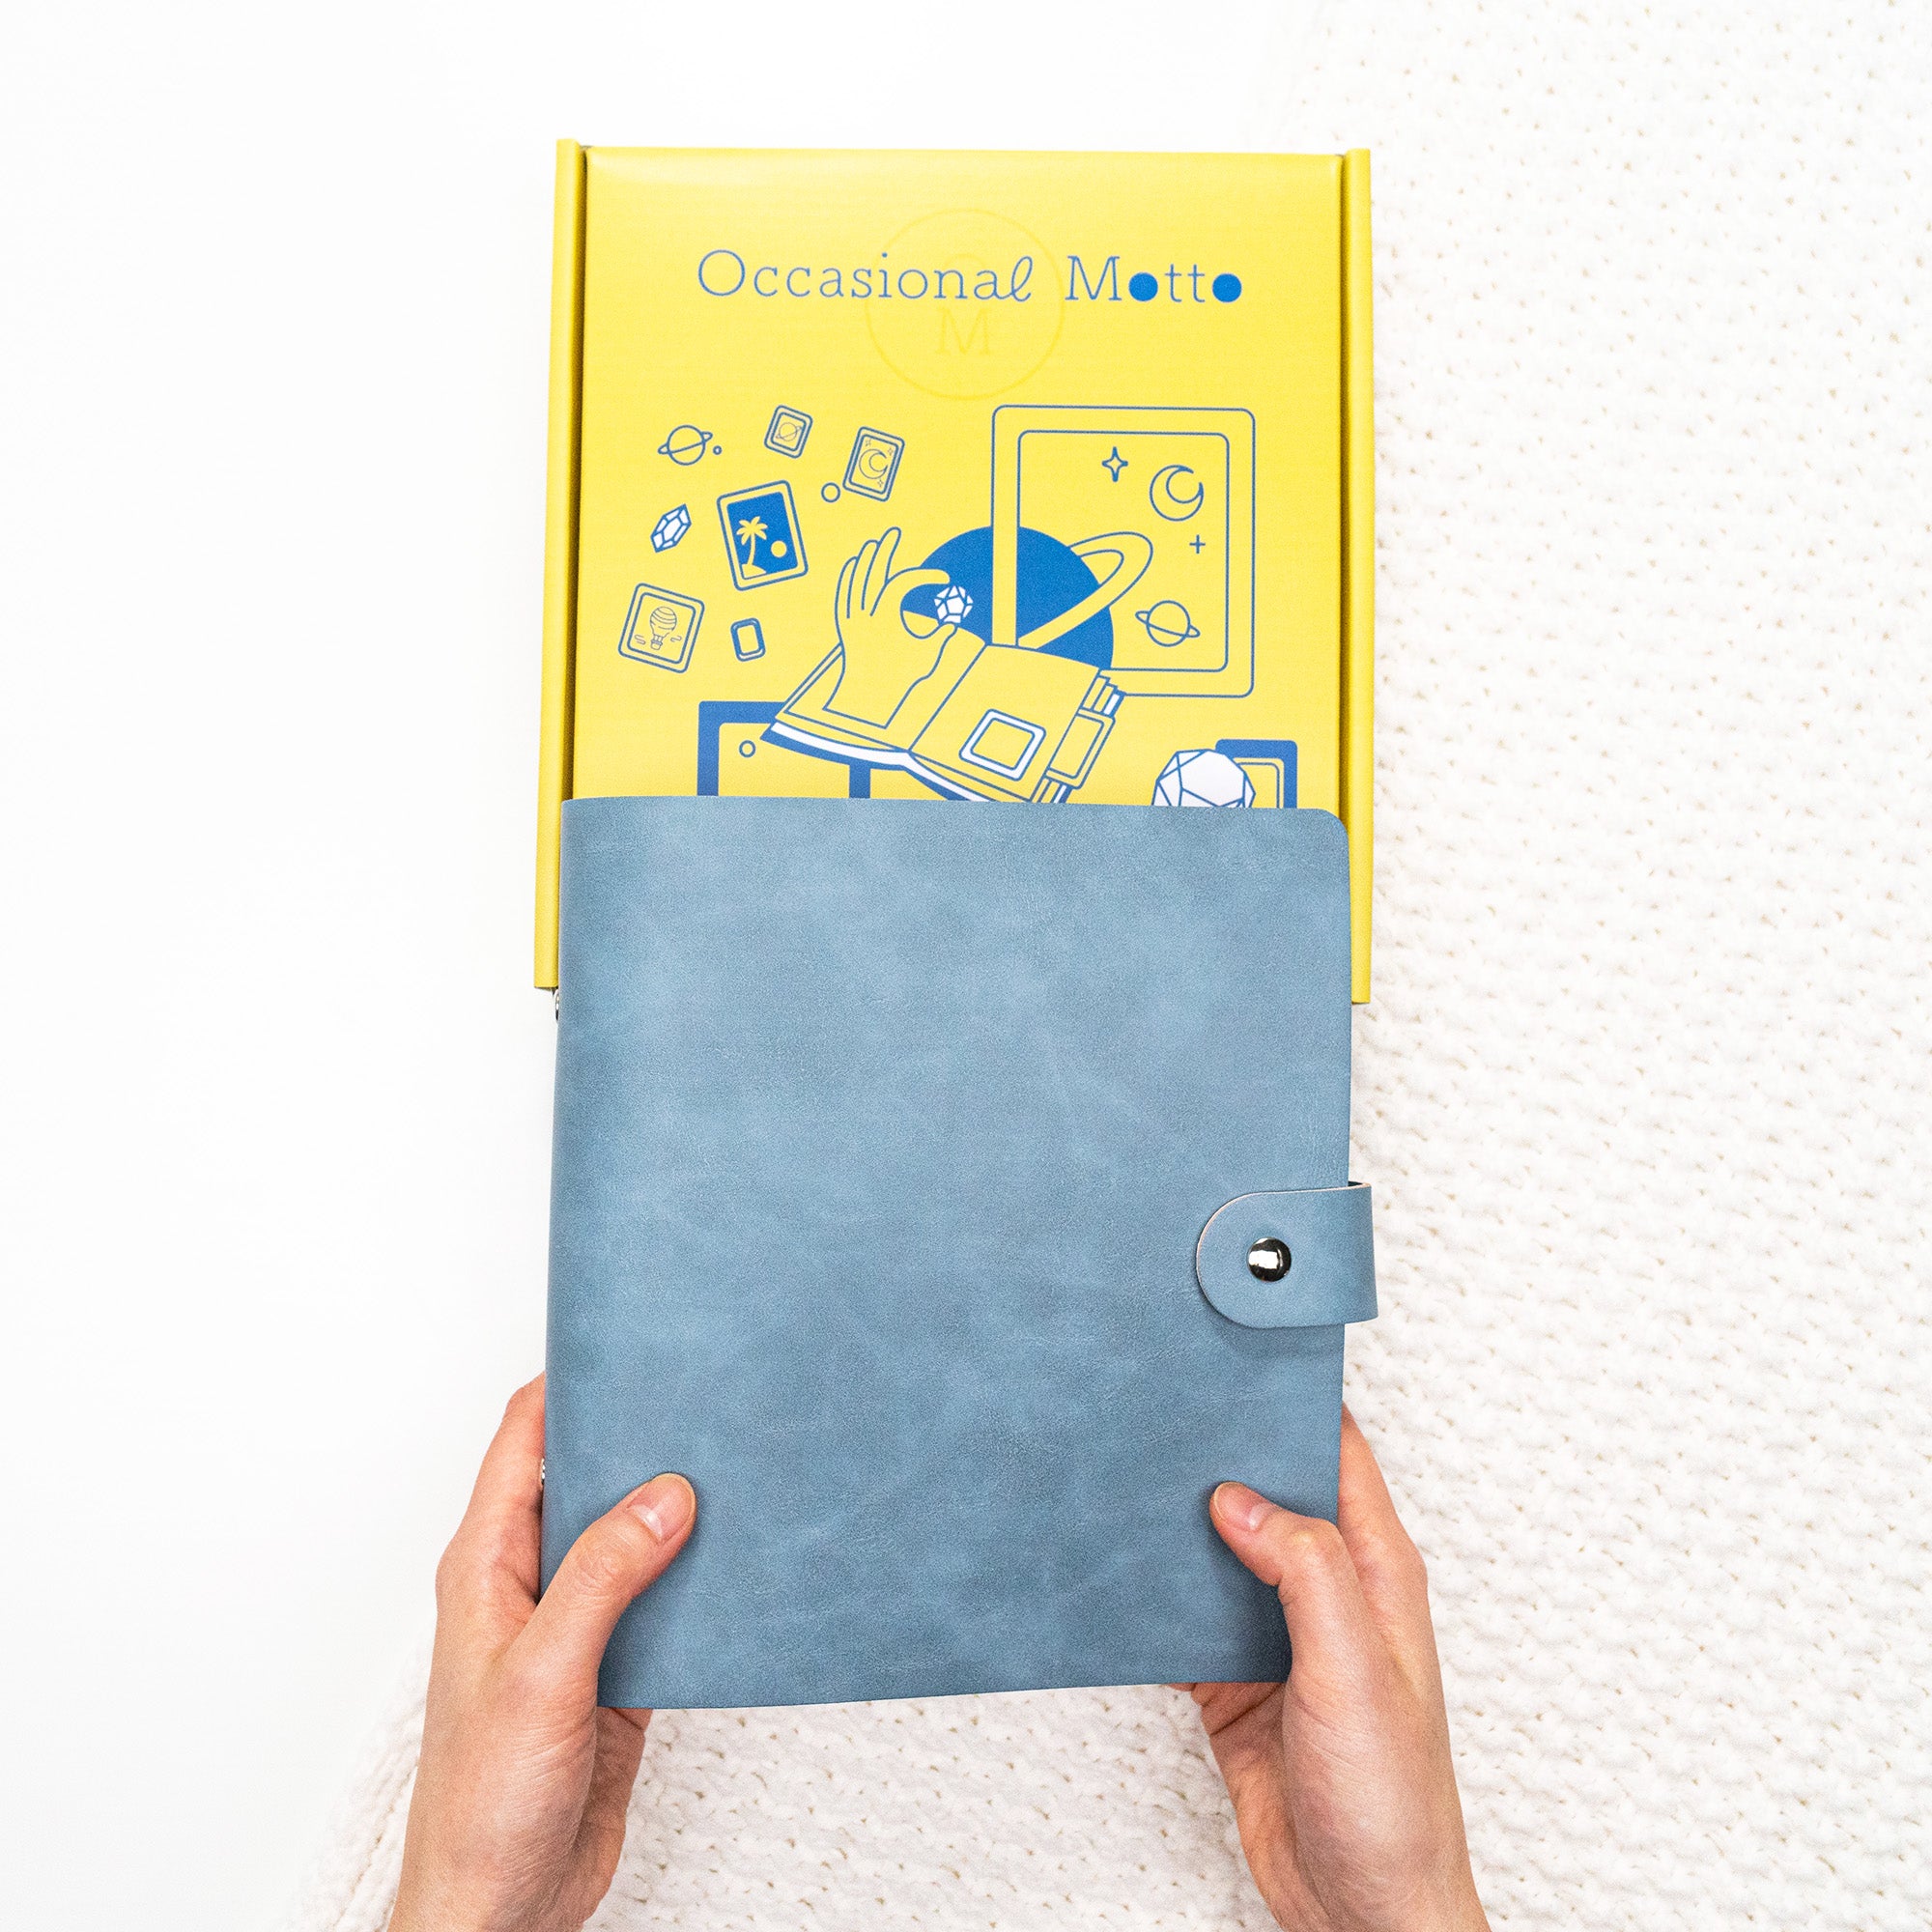 Personalized Linen Hardcover Photo album fits for Instax Mini, Square, Wide  & 600 | 48 Pockets Photo Album | Occasional Motto Handmade Album